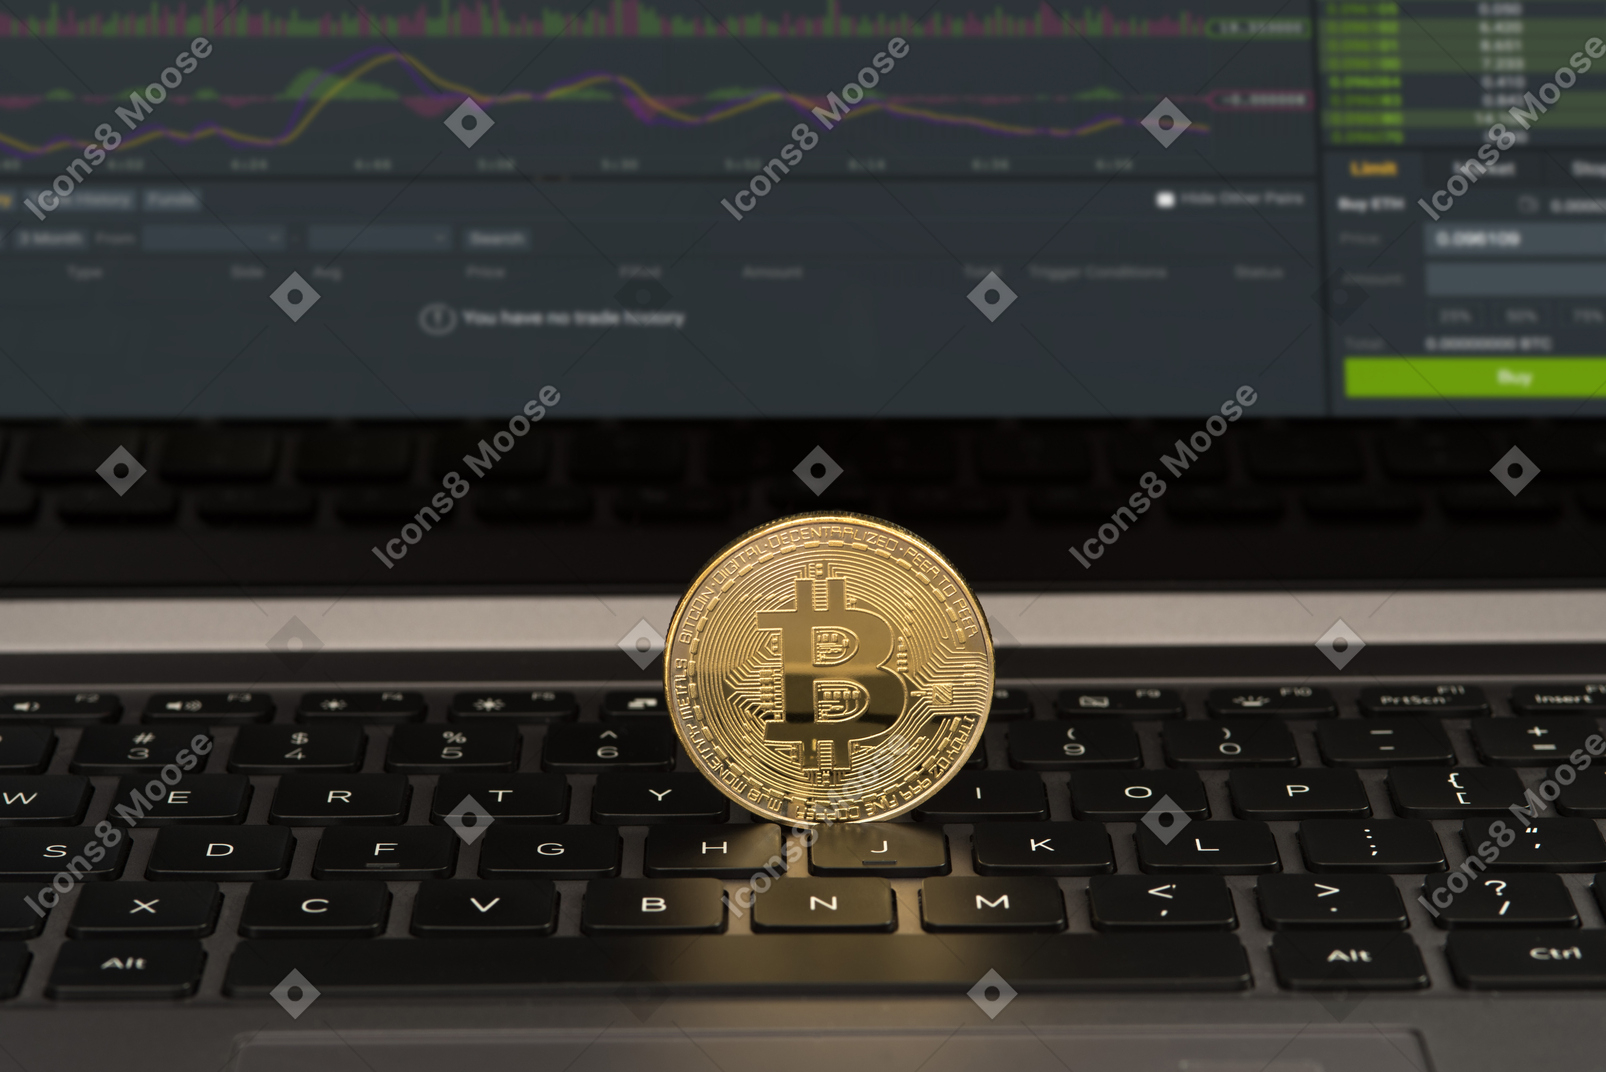 Bitcoin on laptop keyboard